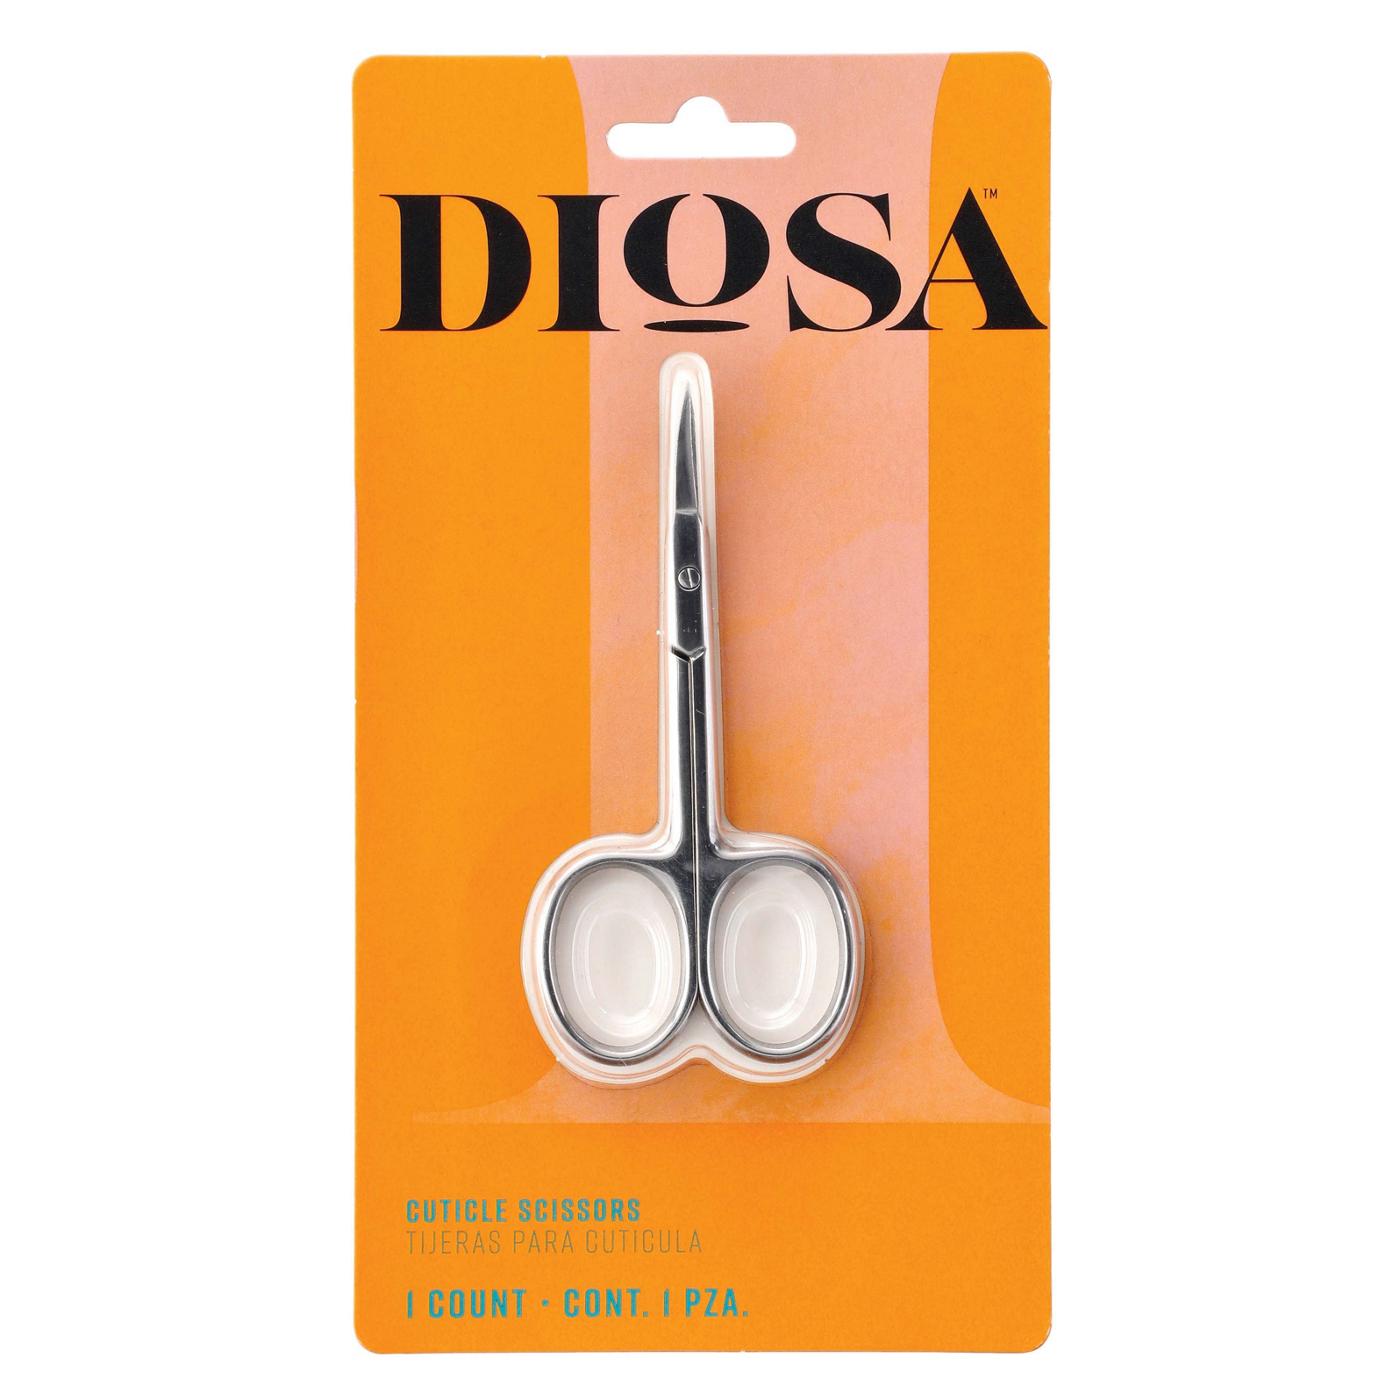 Diosa Cuticle Scissors; image 1 of 3